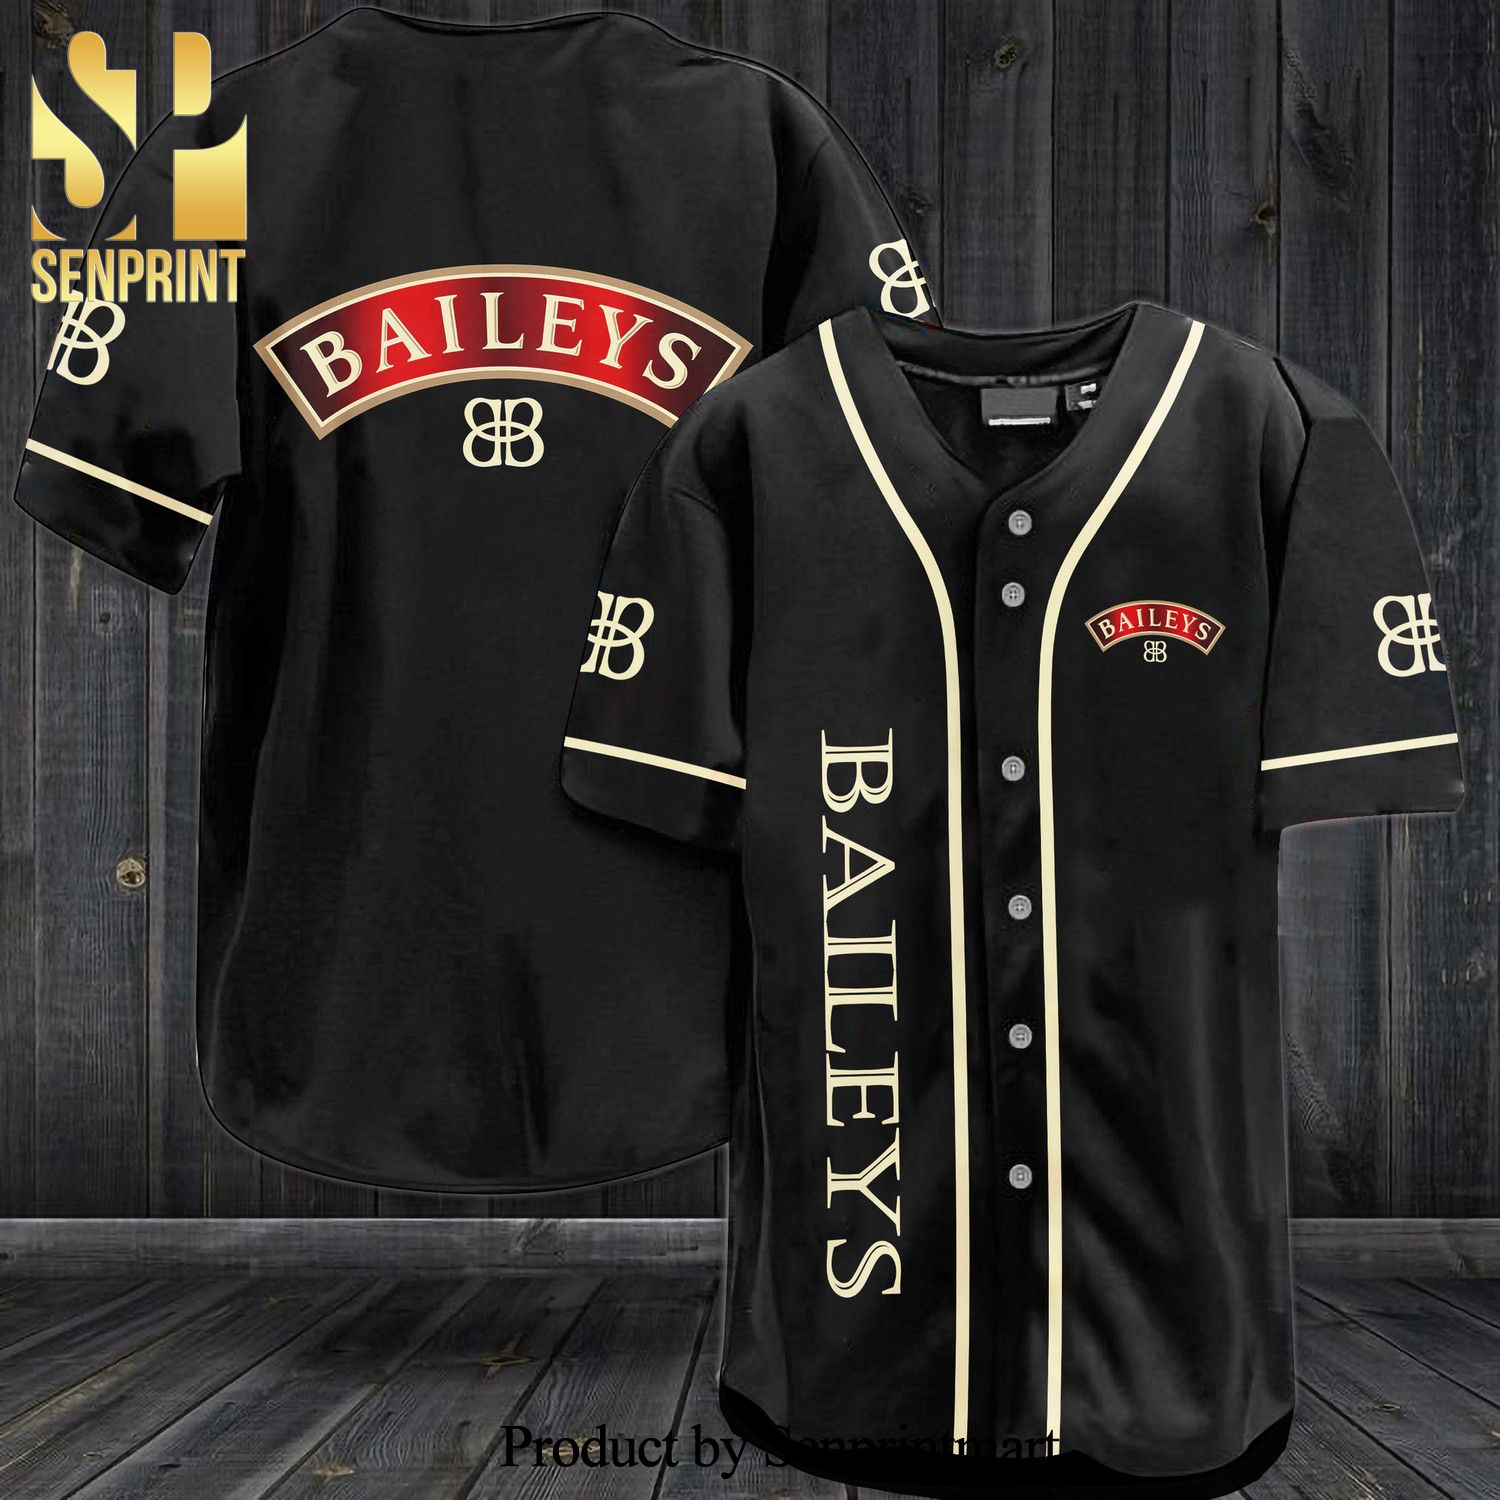 Baileys All Over Print Baseball Jersey – Black